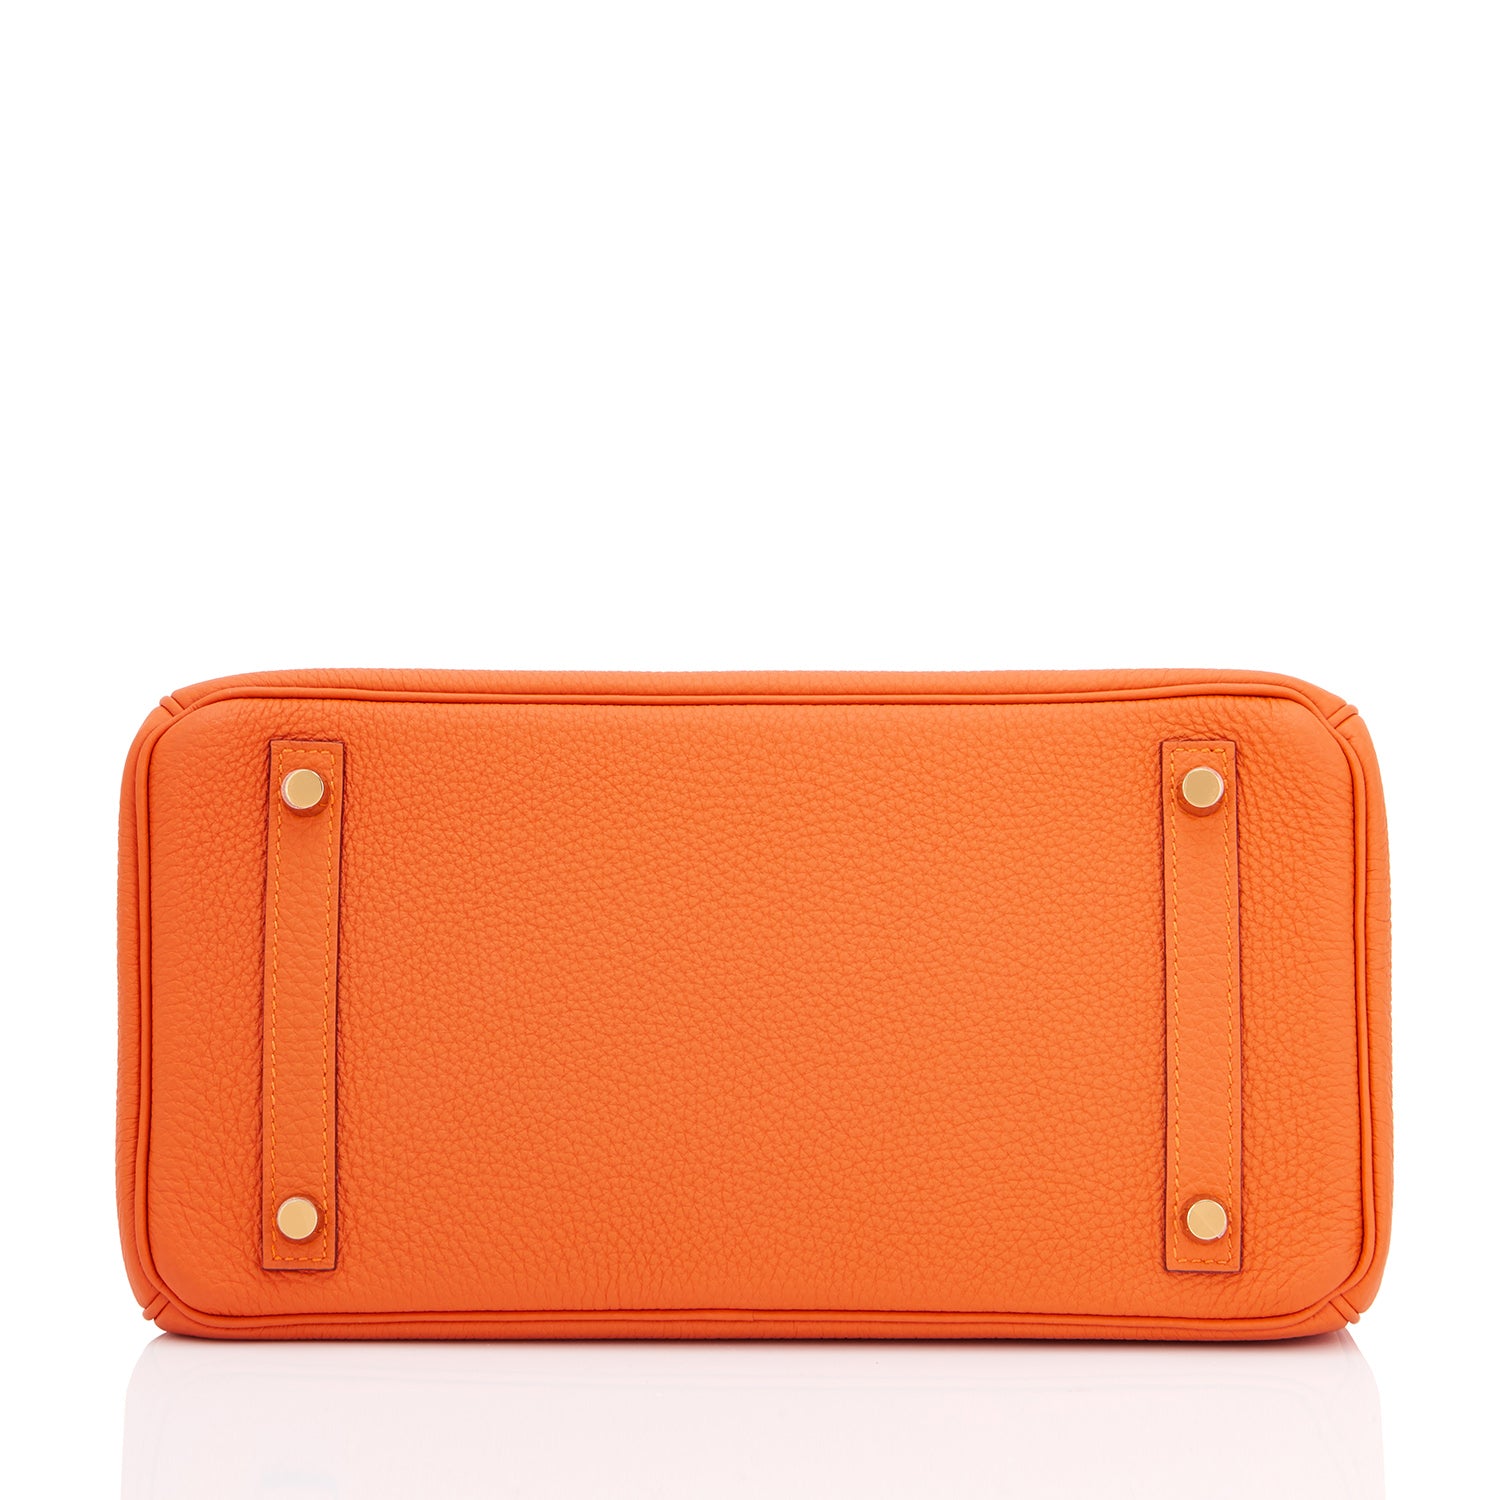 Hermes Birkin 30 orange togo 😀😀😀 gold hardware!! What fits